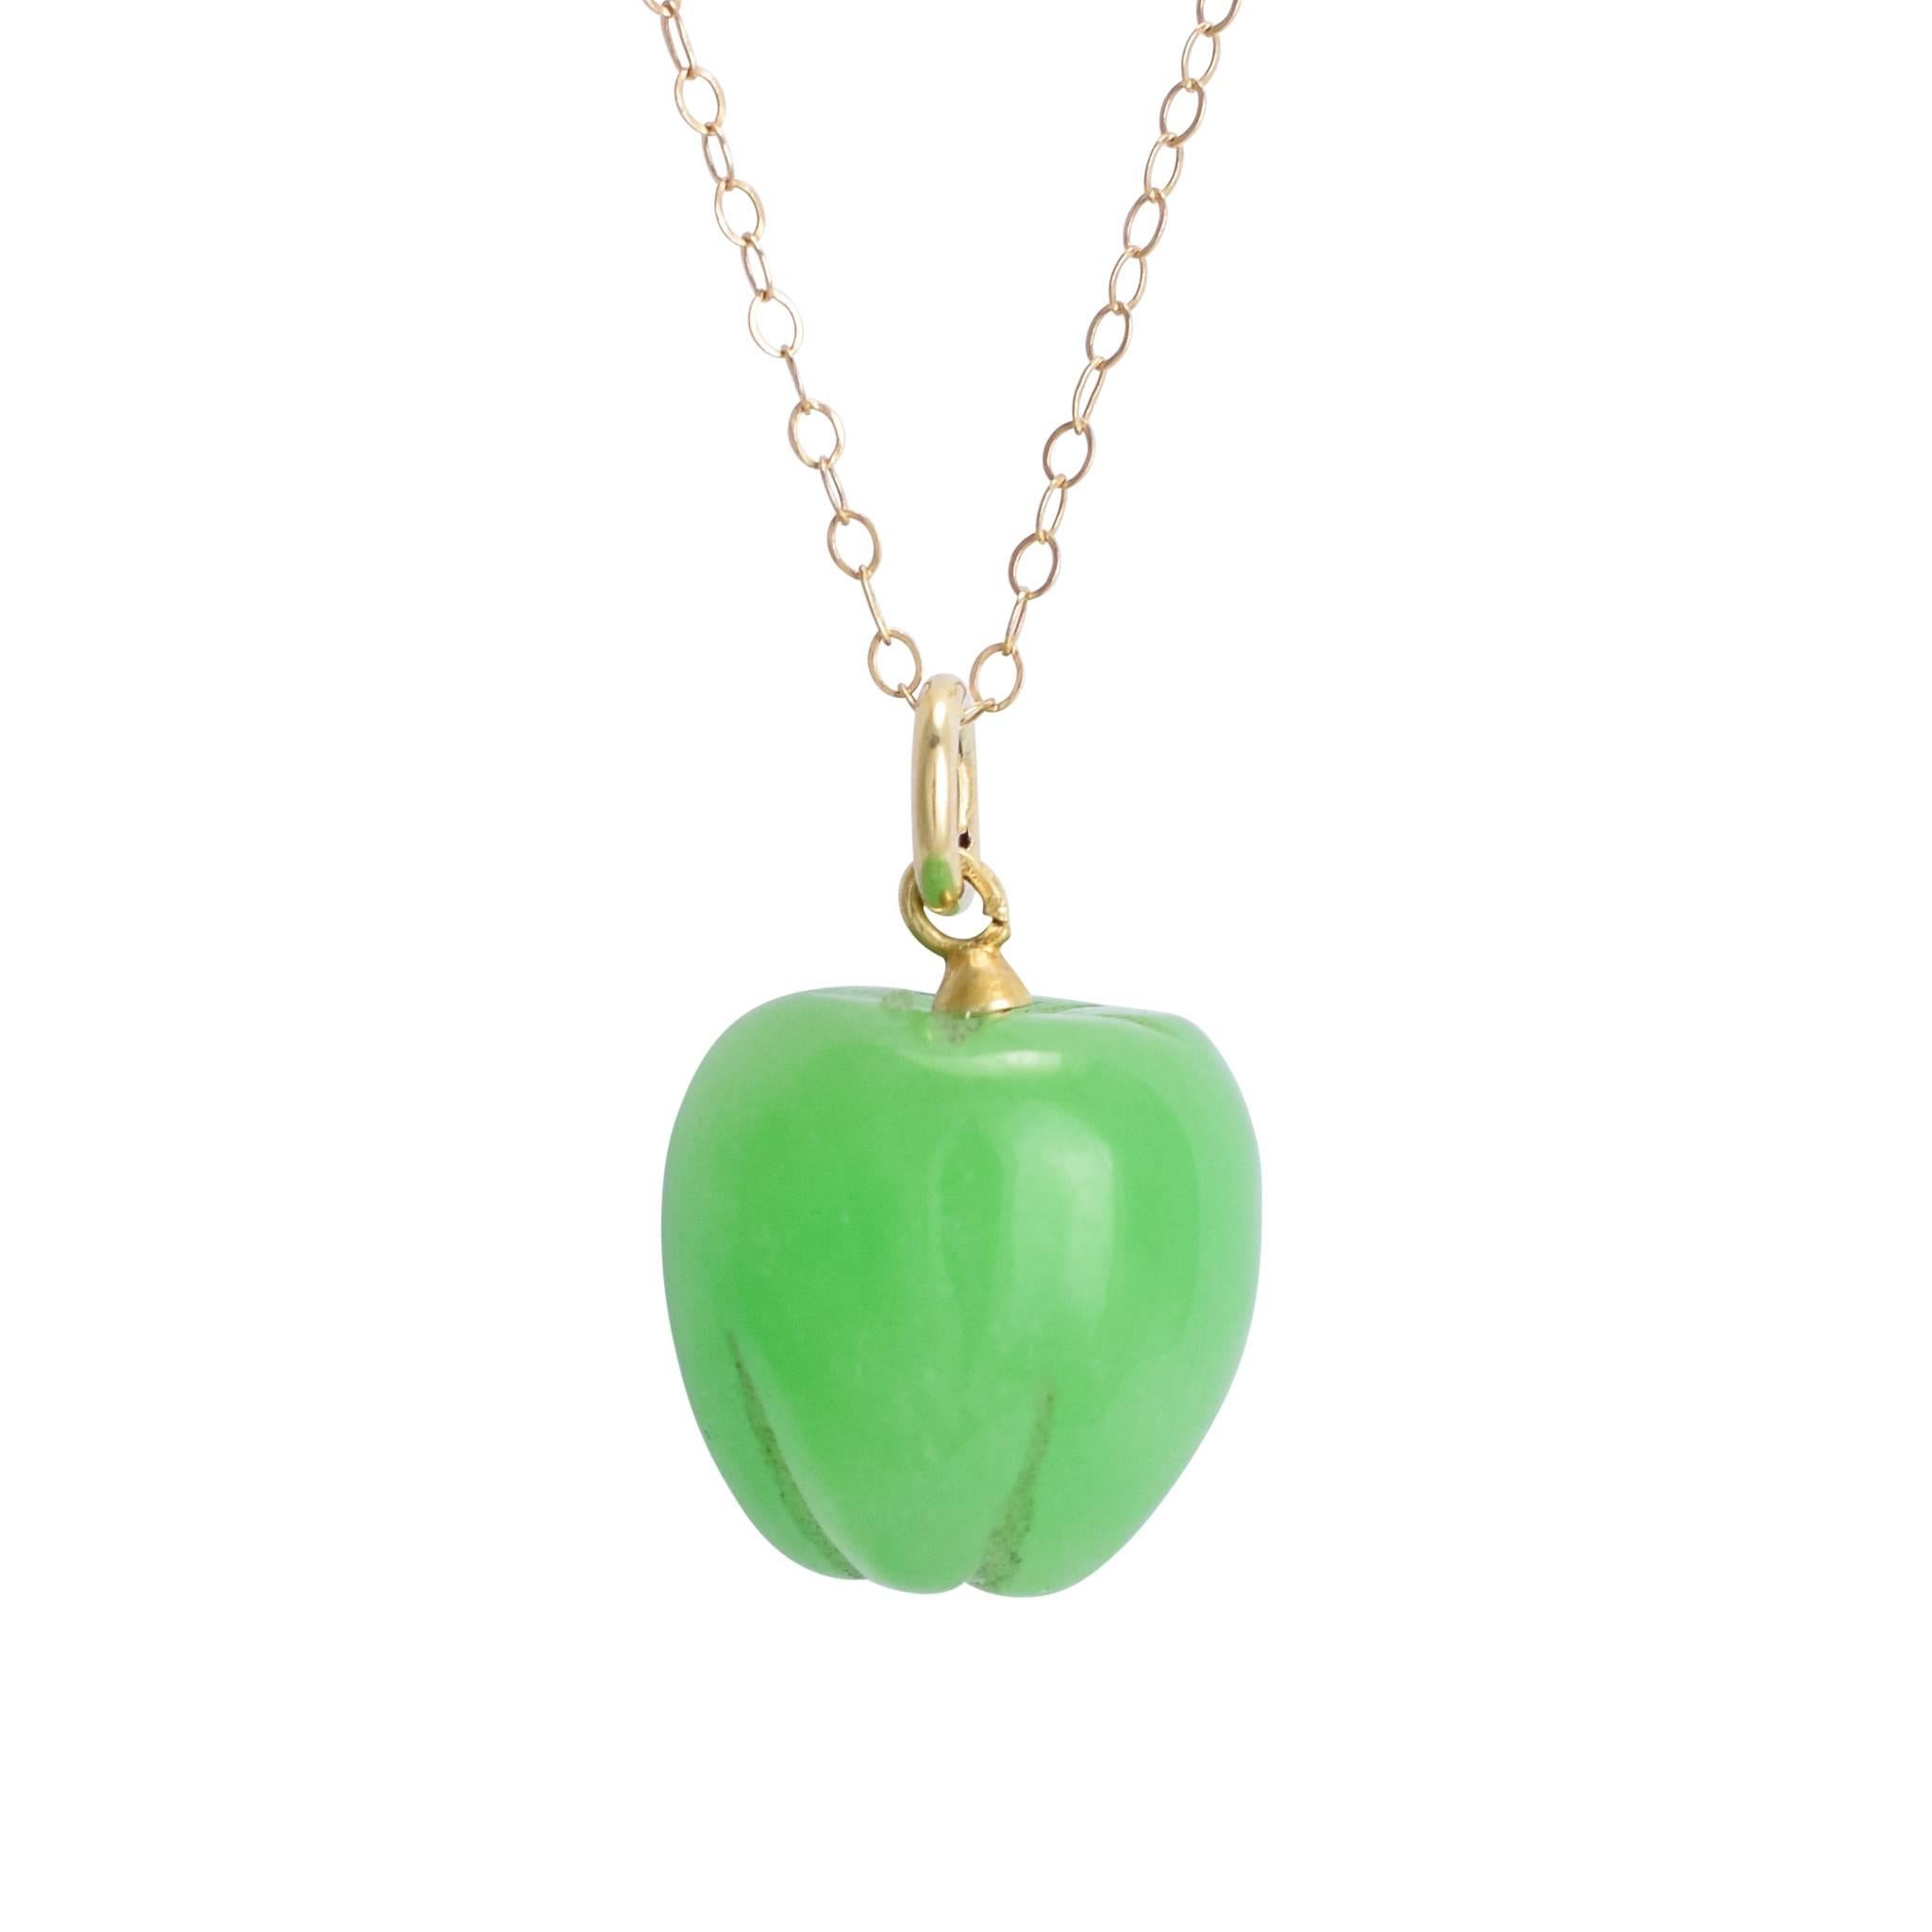 Antique Victorian Jade Green Apple Pendant Necklace